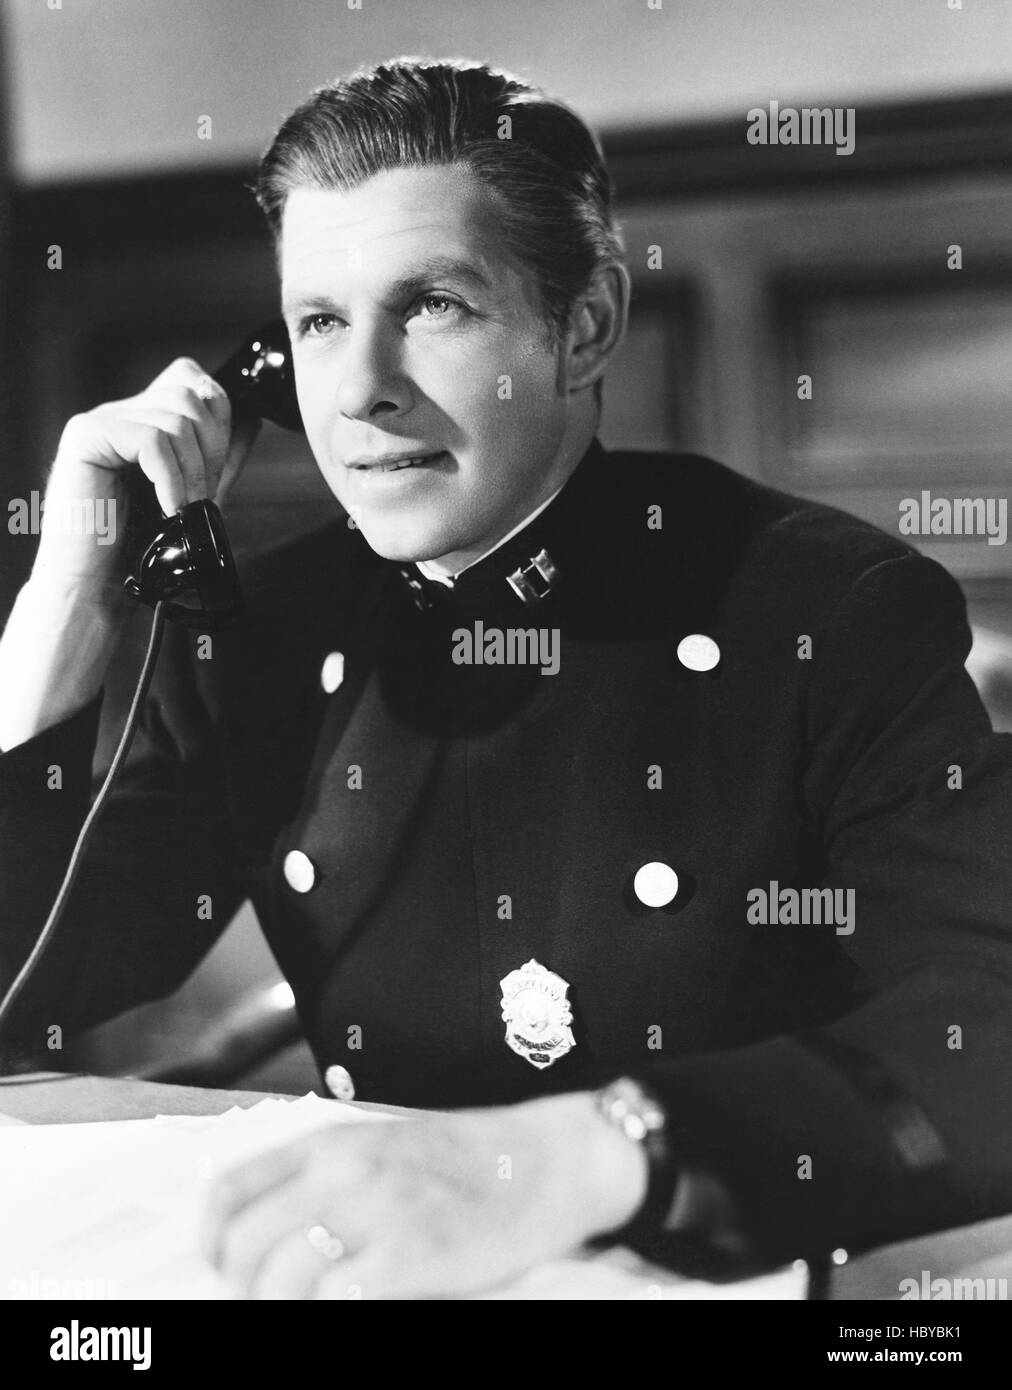 LITTLE NELLIE KELLY, George Murphy, 1940 Stock Photo - Alamy